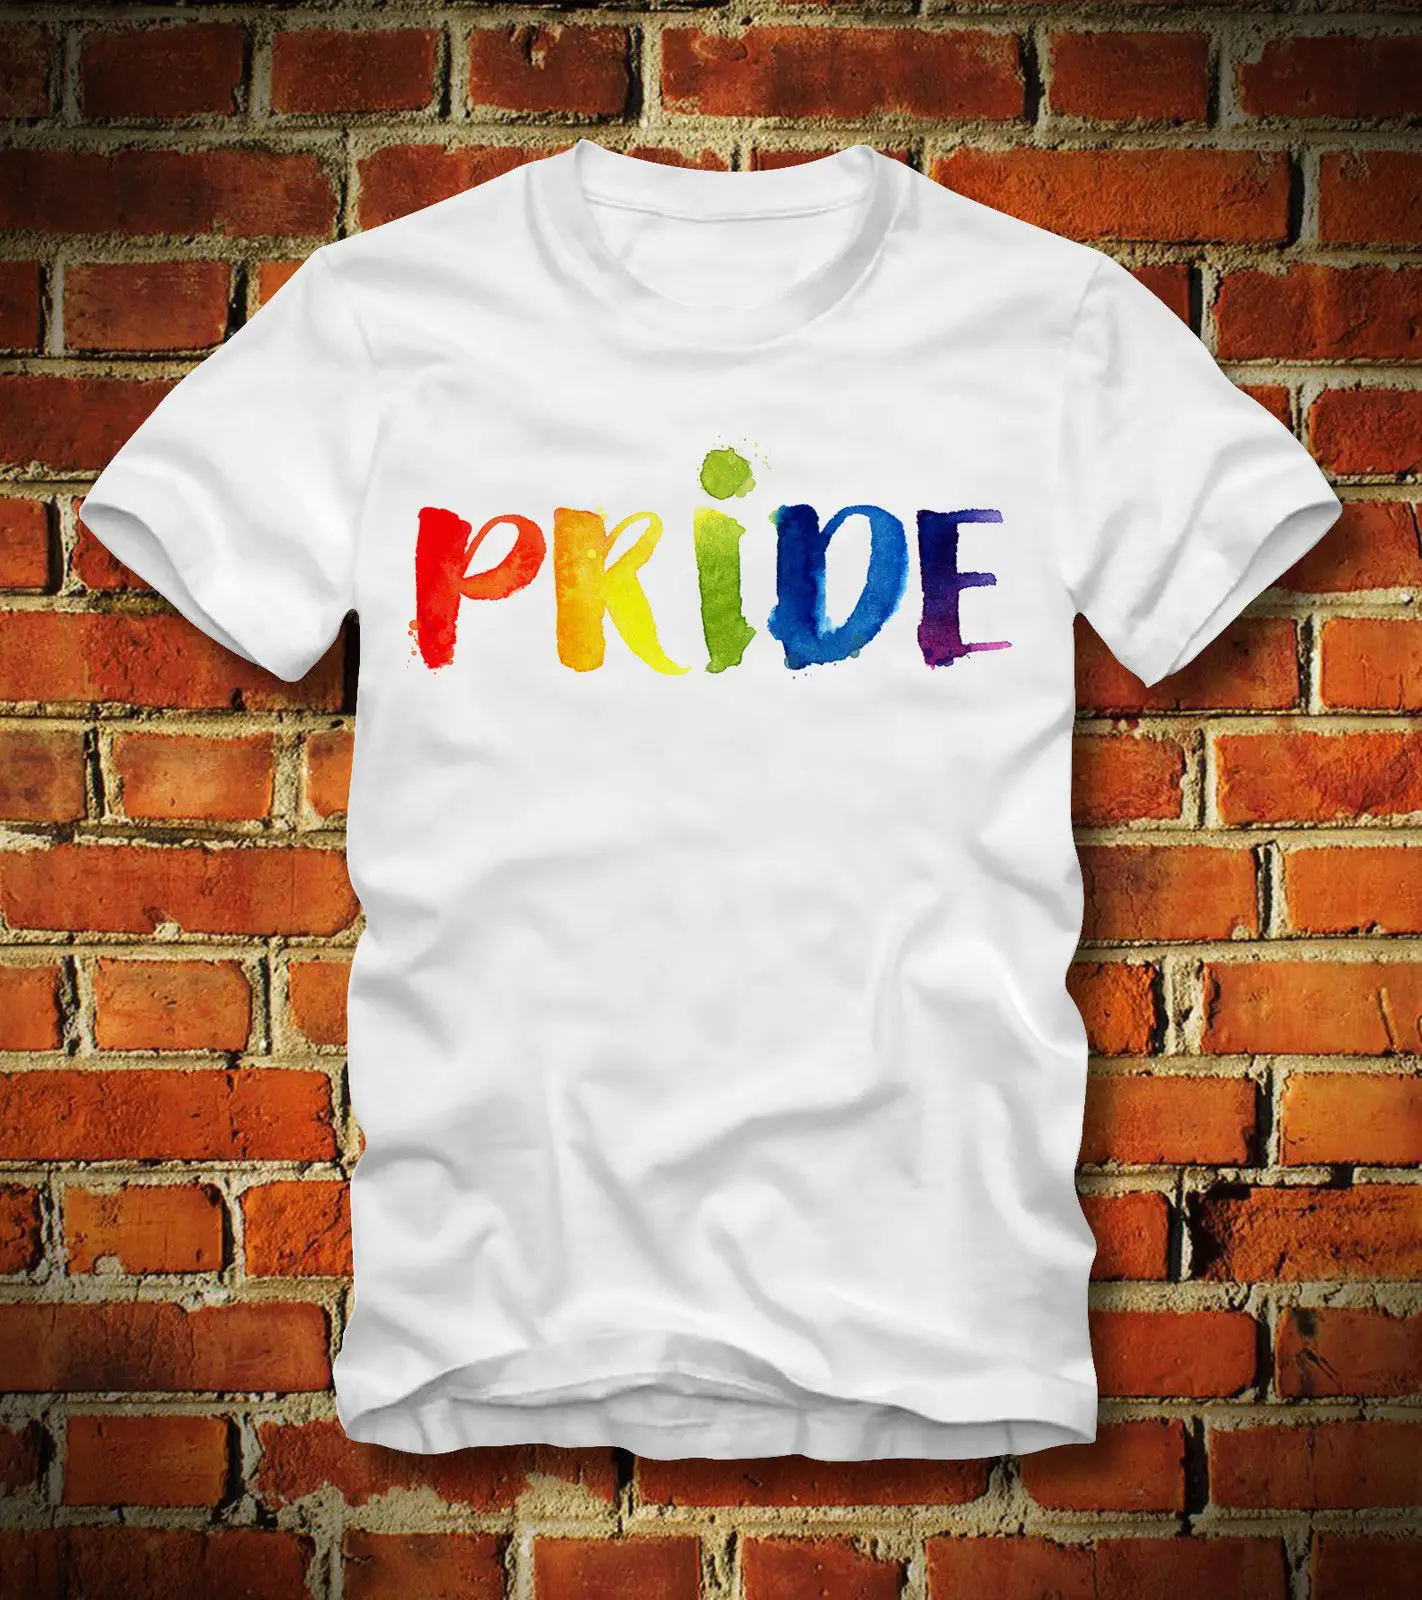 

2019 Summer New Brand T Shirt Men Hip Hop Men Casual T SHIRT PRIDE LGBT GAY LESBIAN RIGHTS EQUALITY RAINBOW REGENBOGENTee Shirt